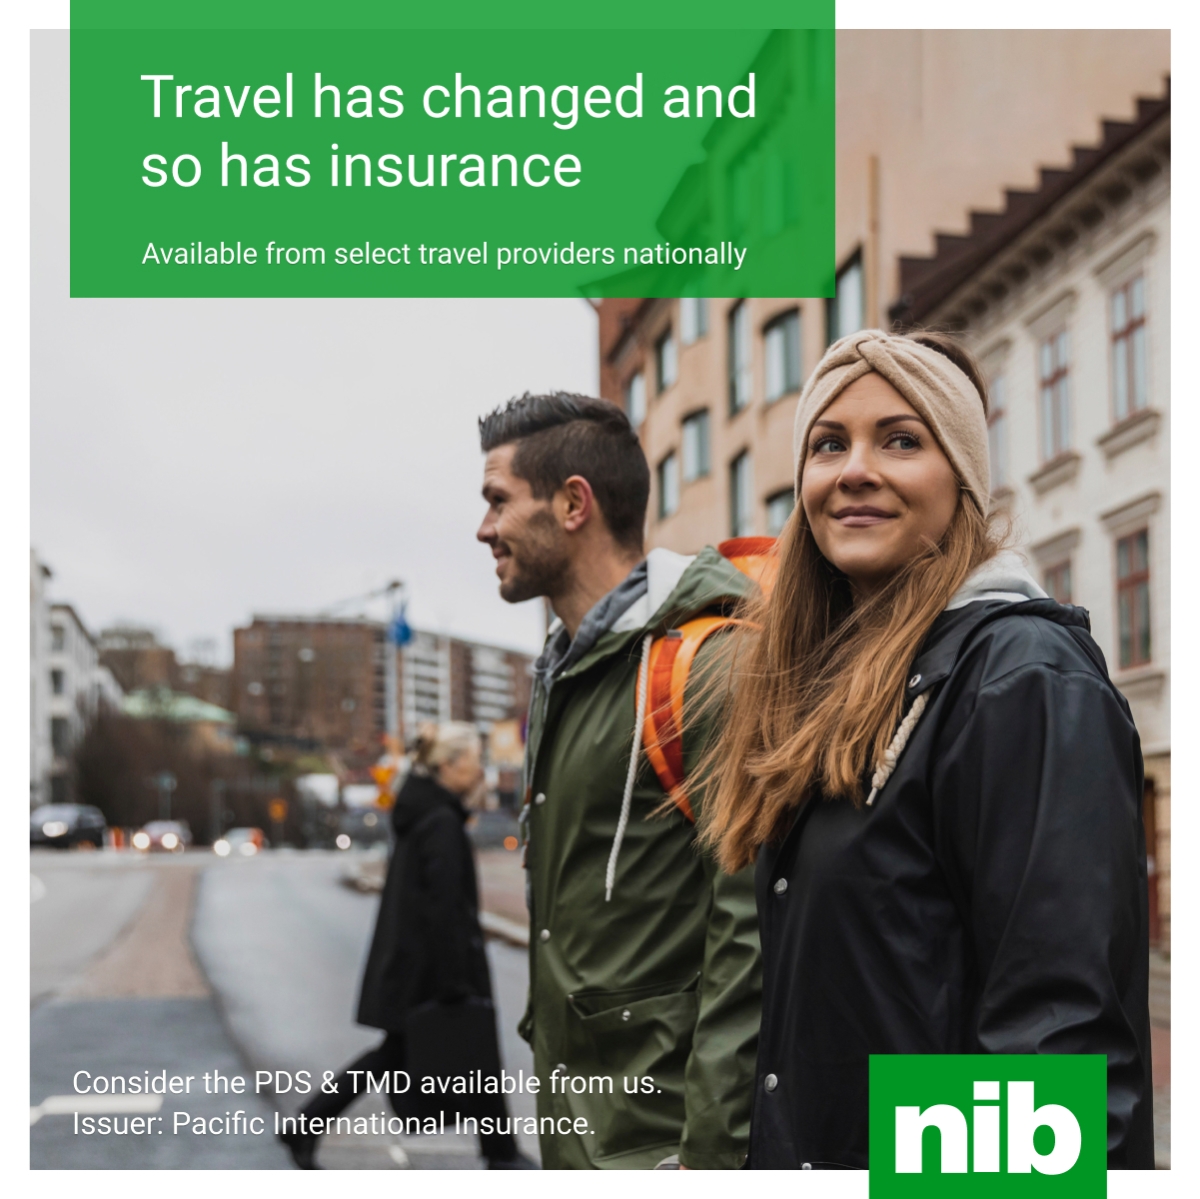 nib comprehensive travel insurance